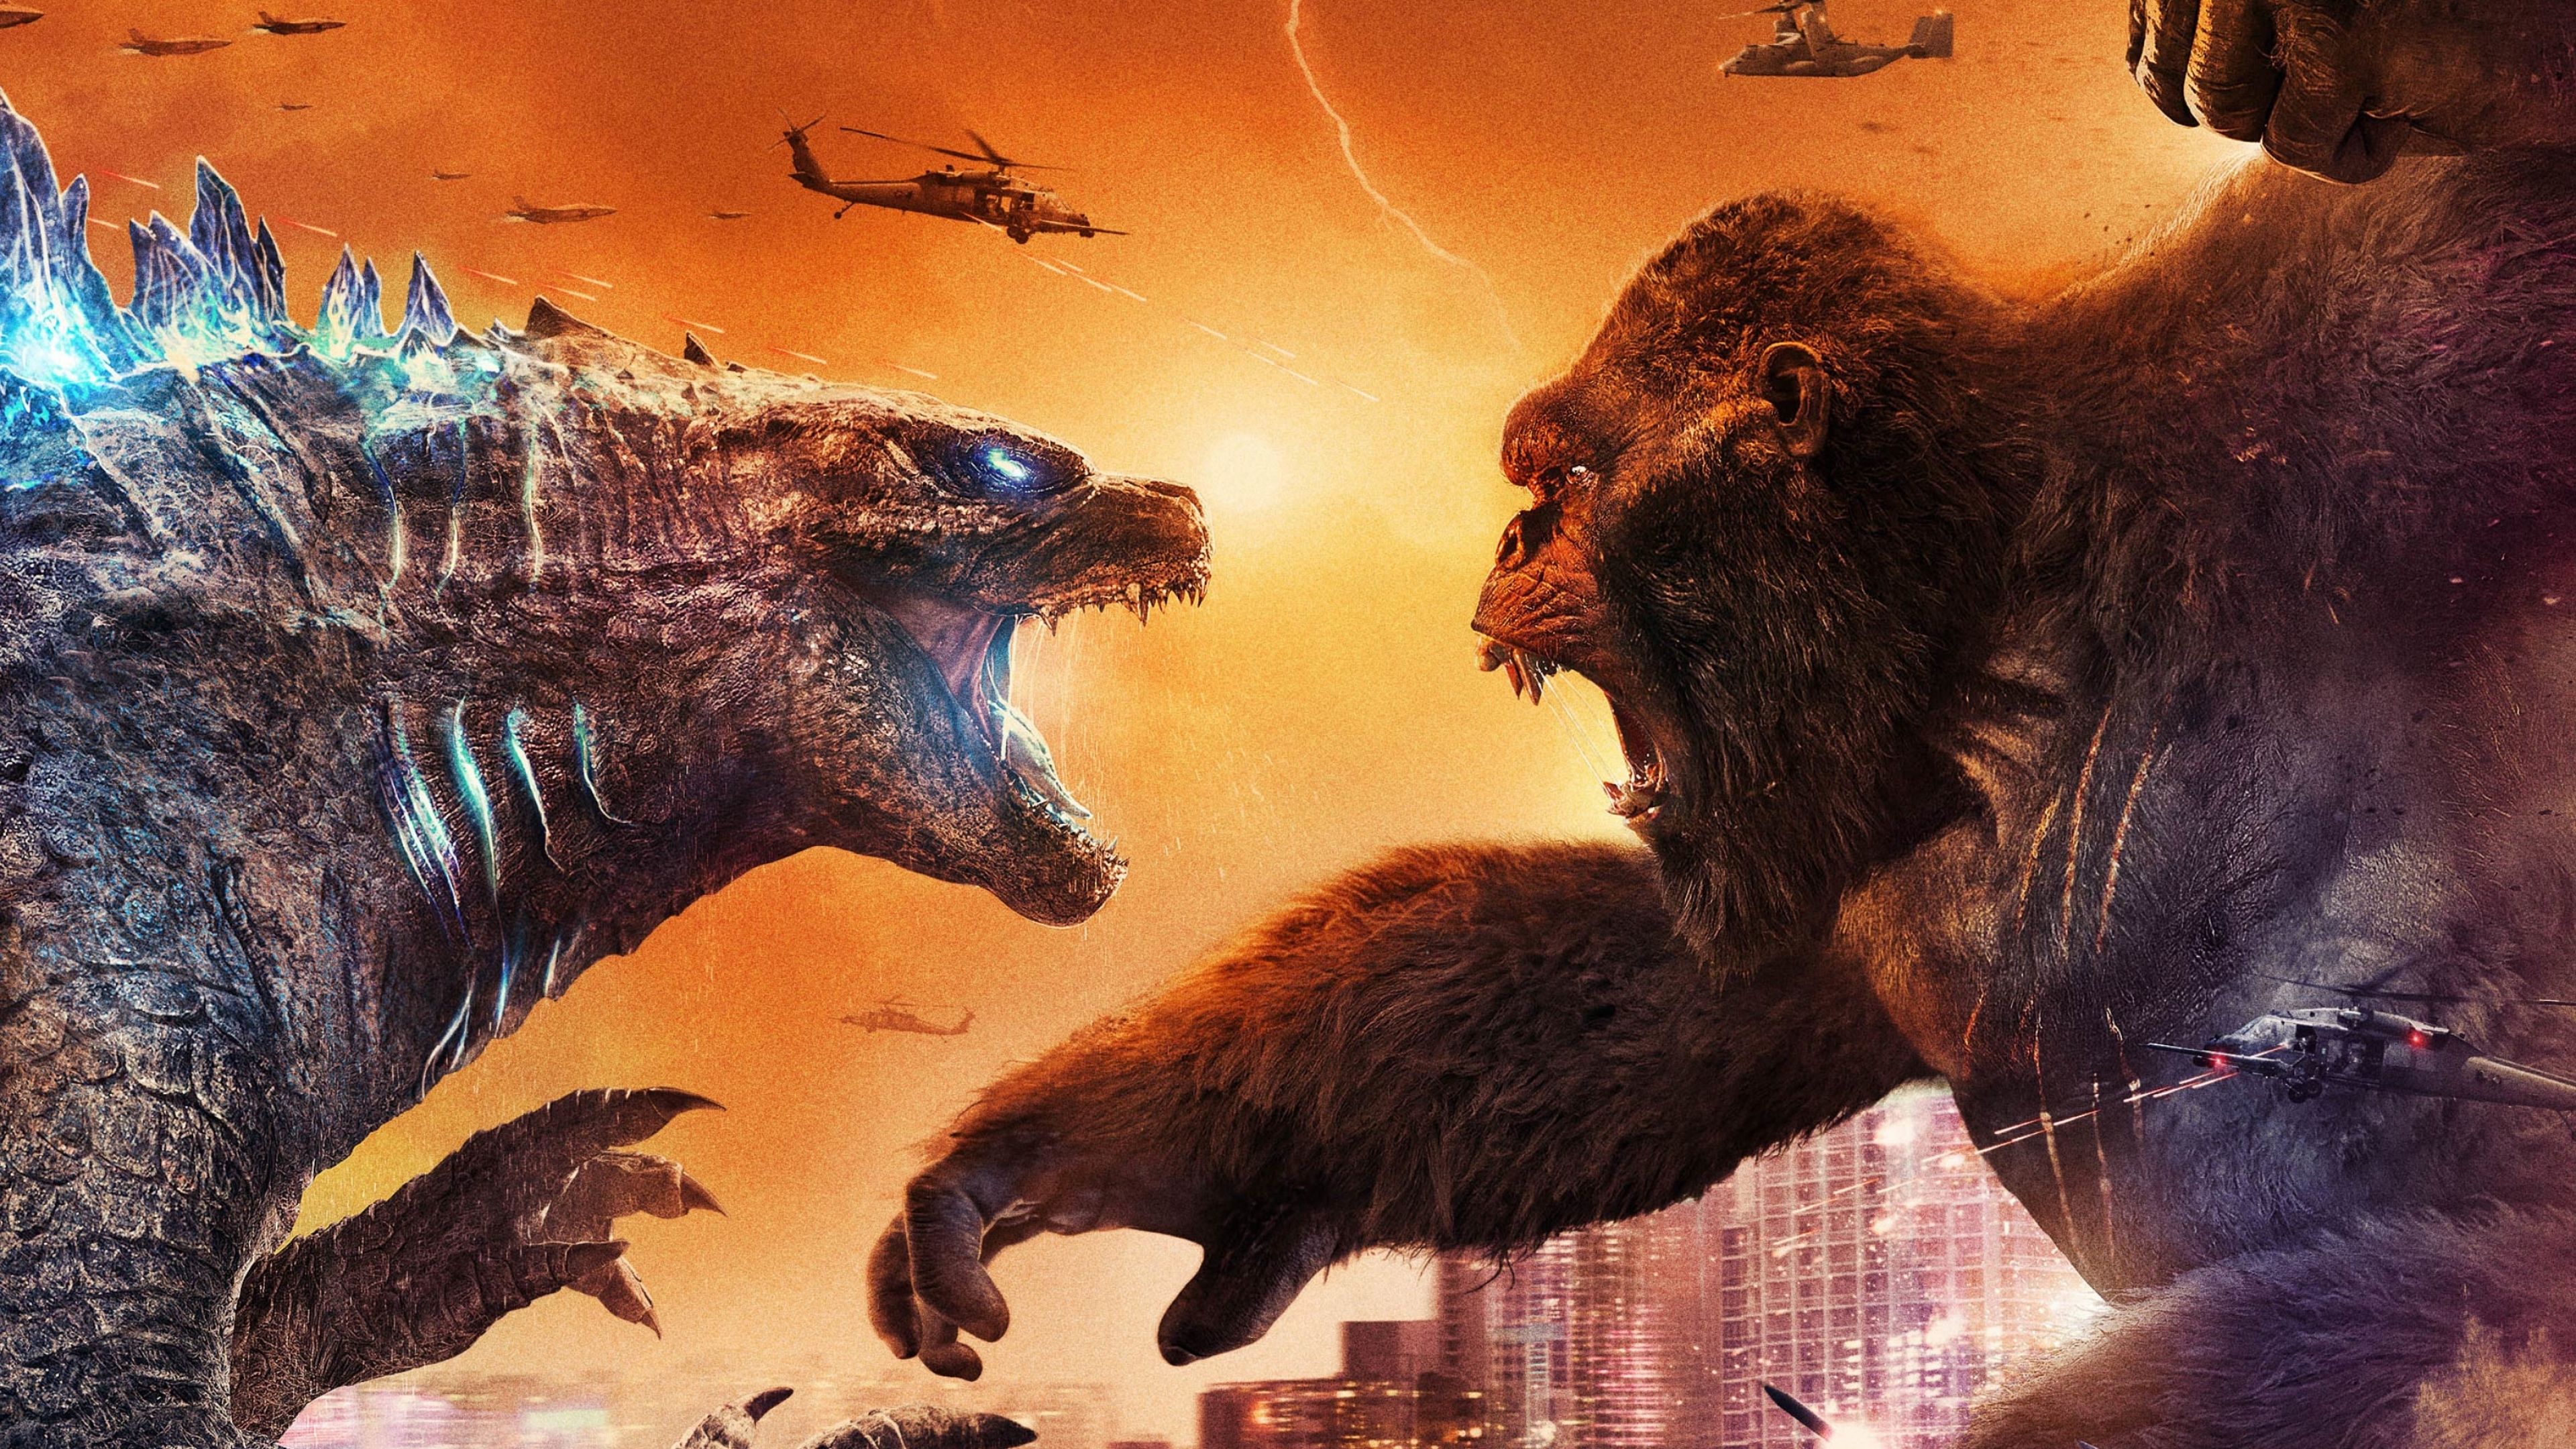 Top 999+ Godzilla Vs Kong Wallpaper Full HD, 4K✓Free to Use